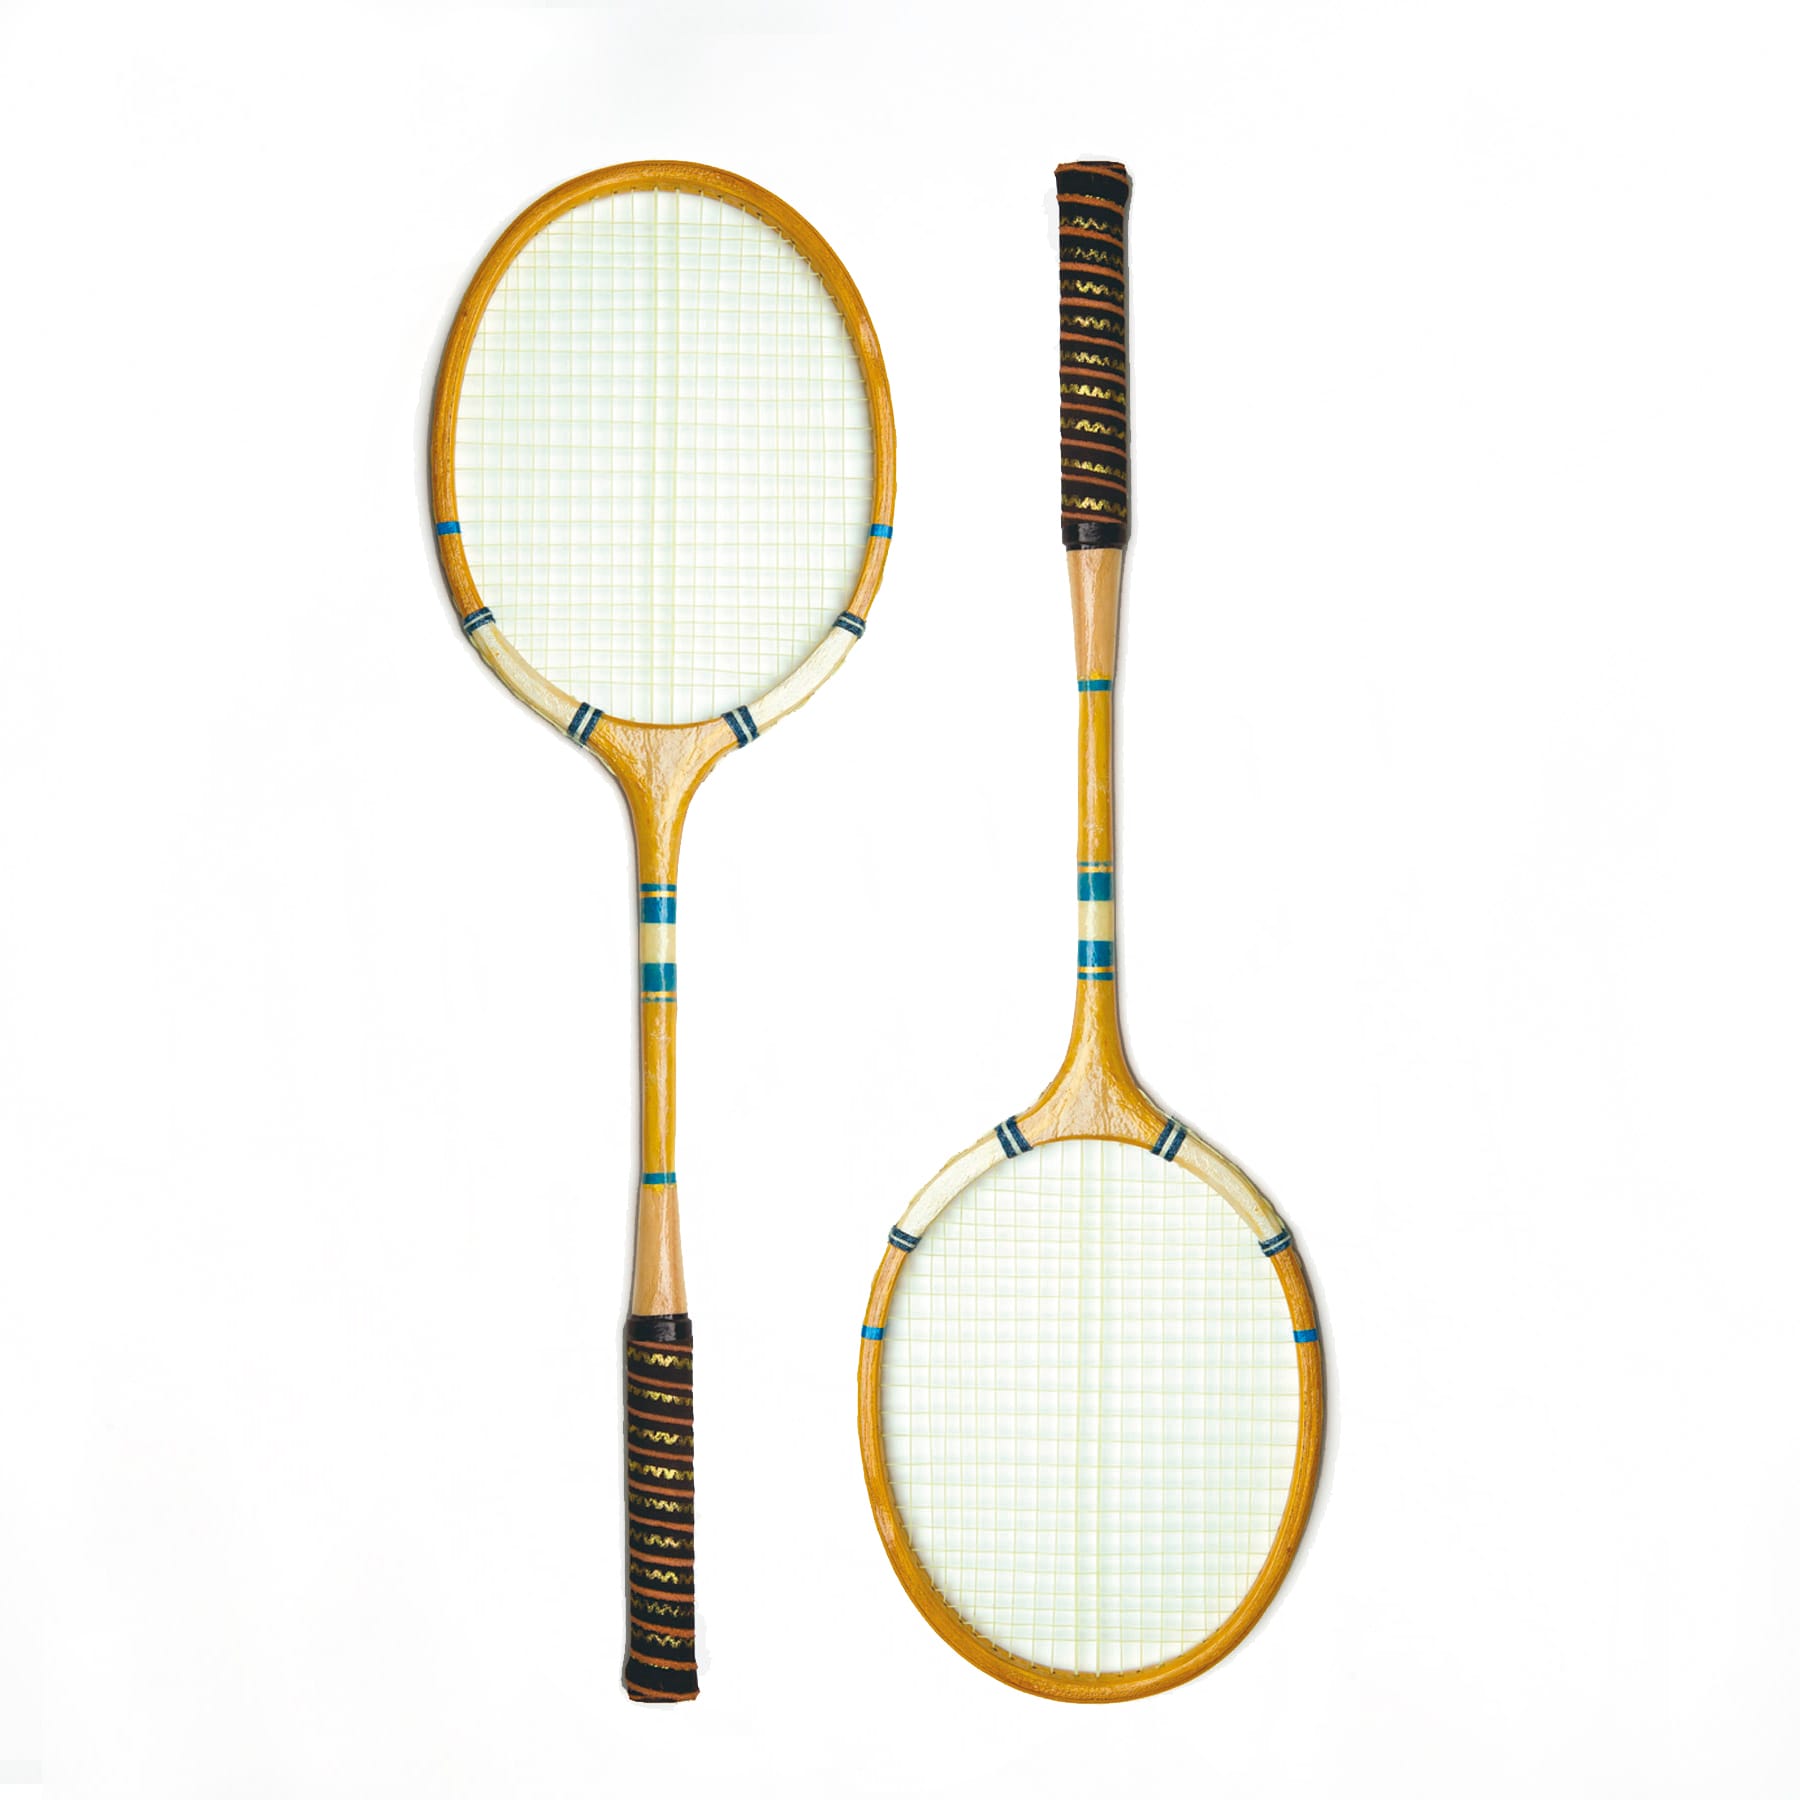 bbybs_backyard_badminton_set_rackets-3.jpg